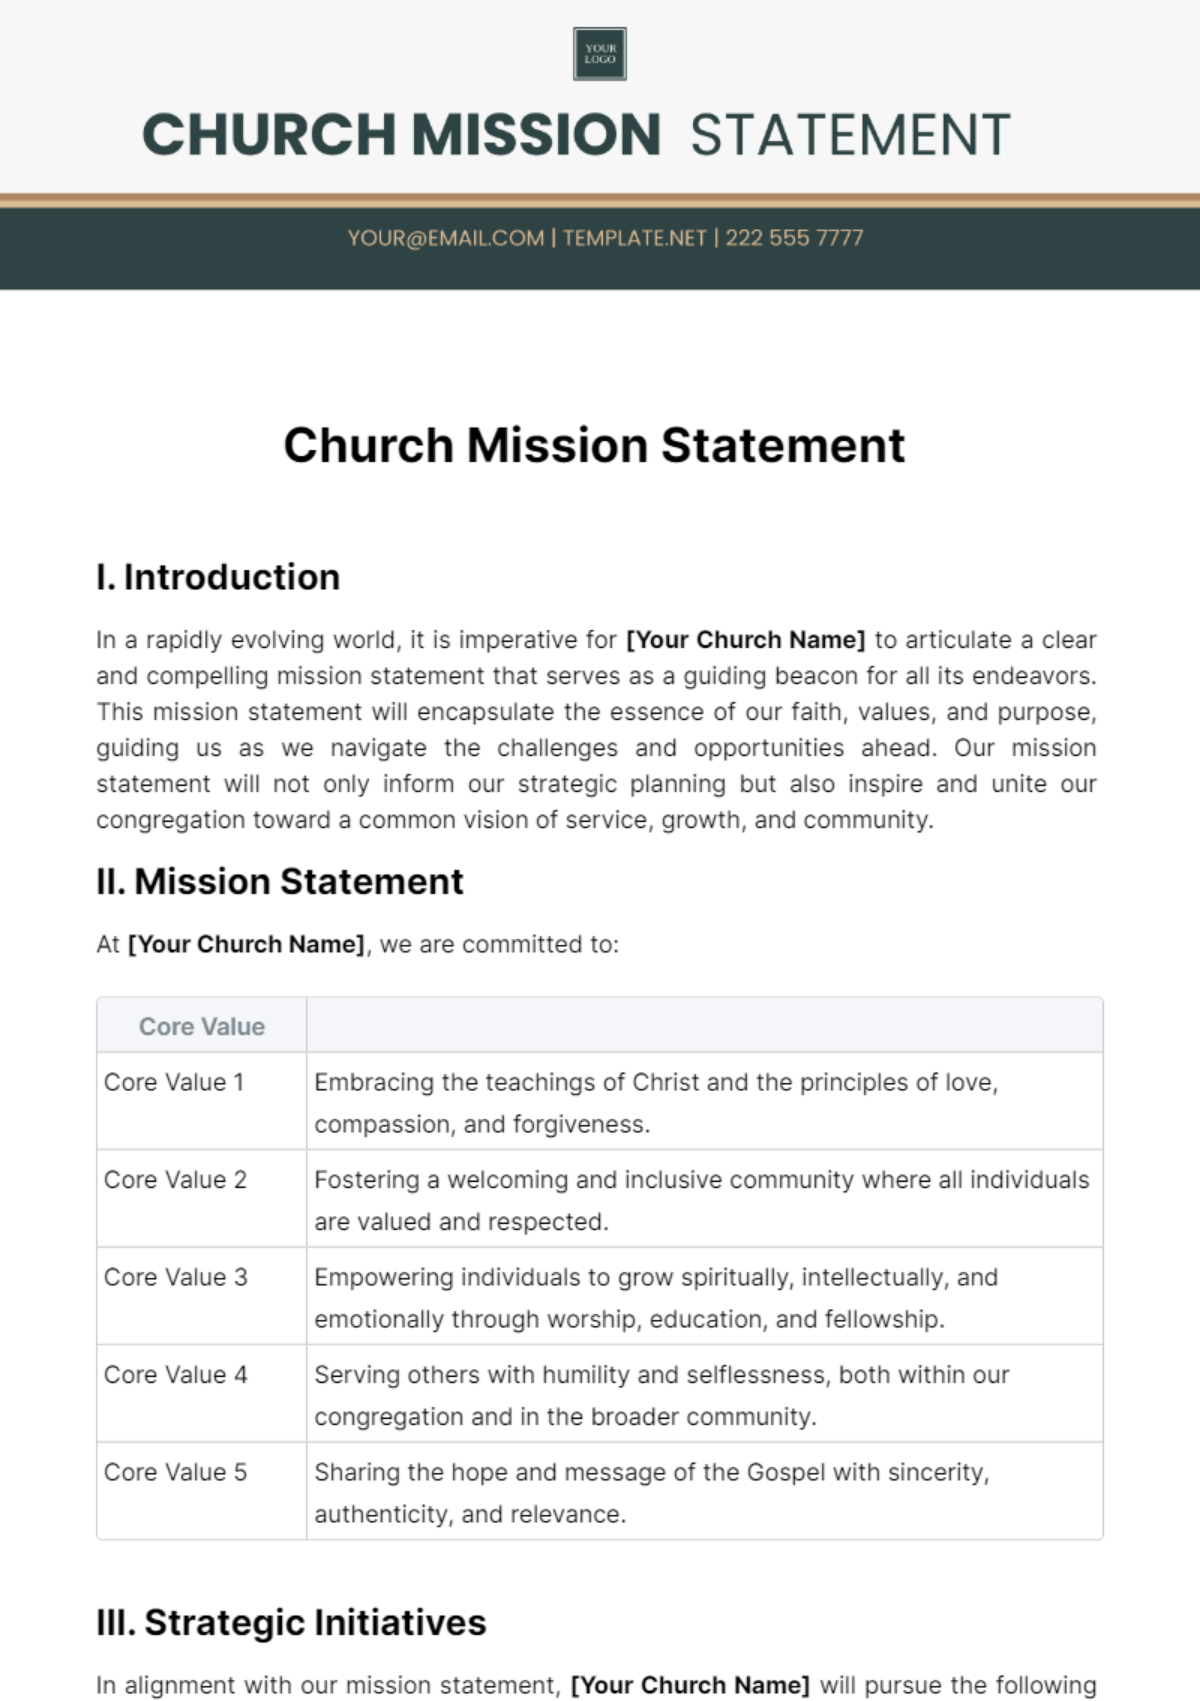 Church Mission Statement Template